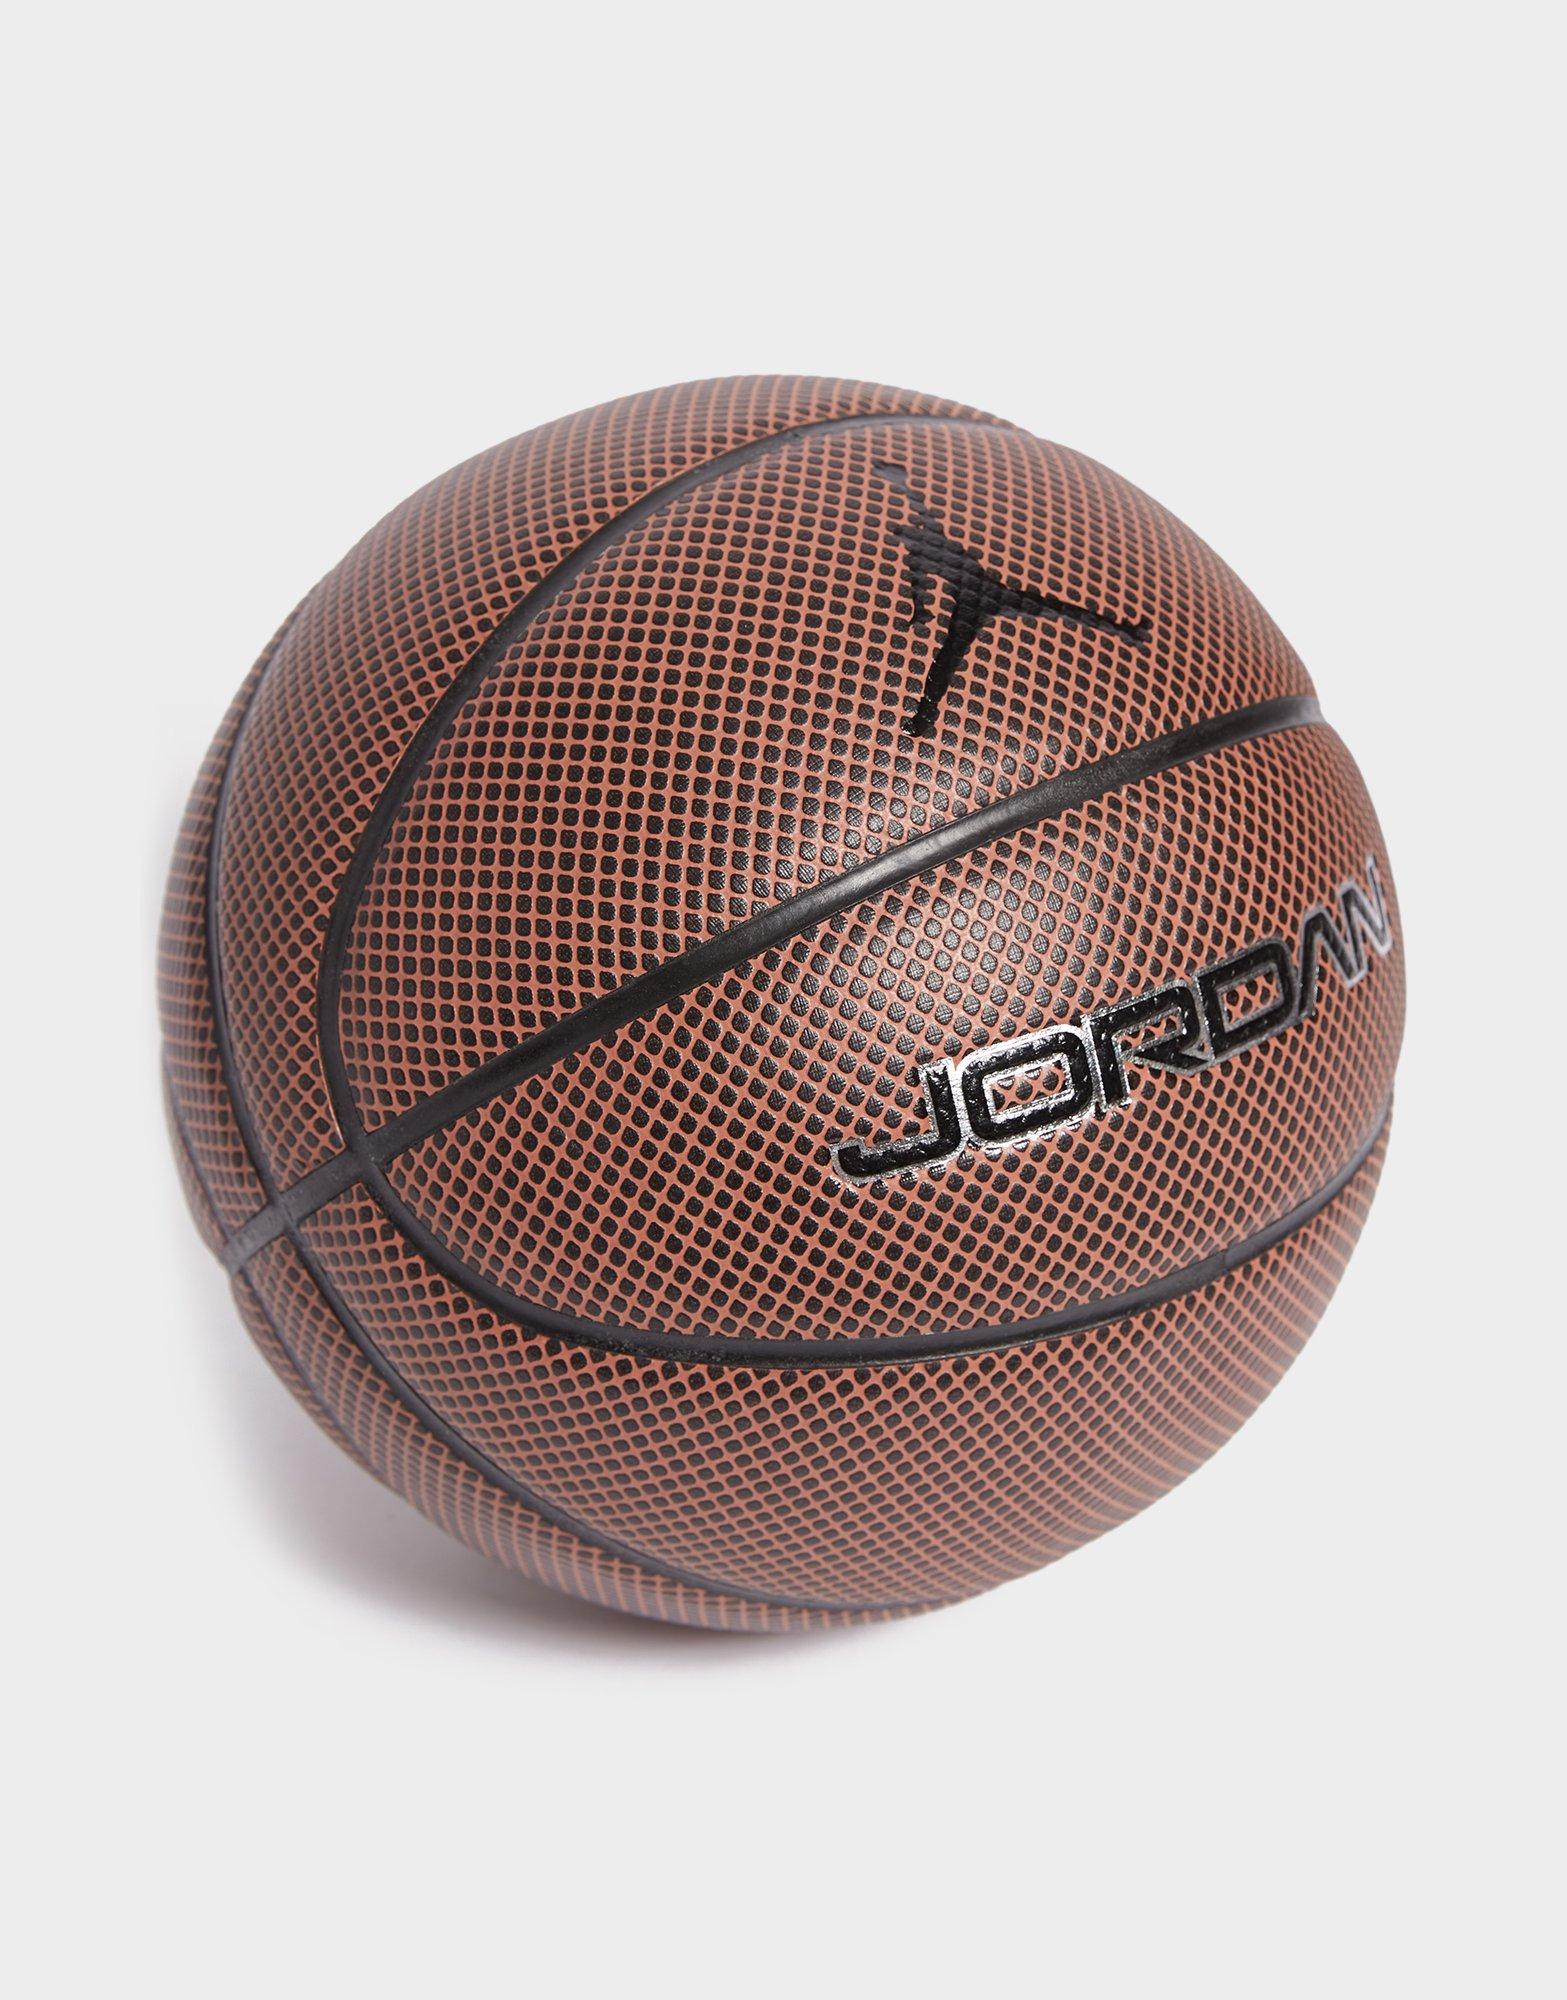 balon de baloncesto jordan